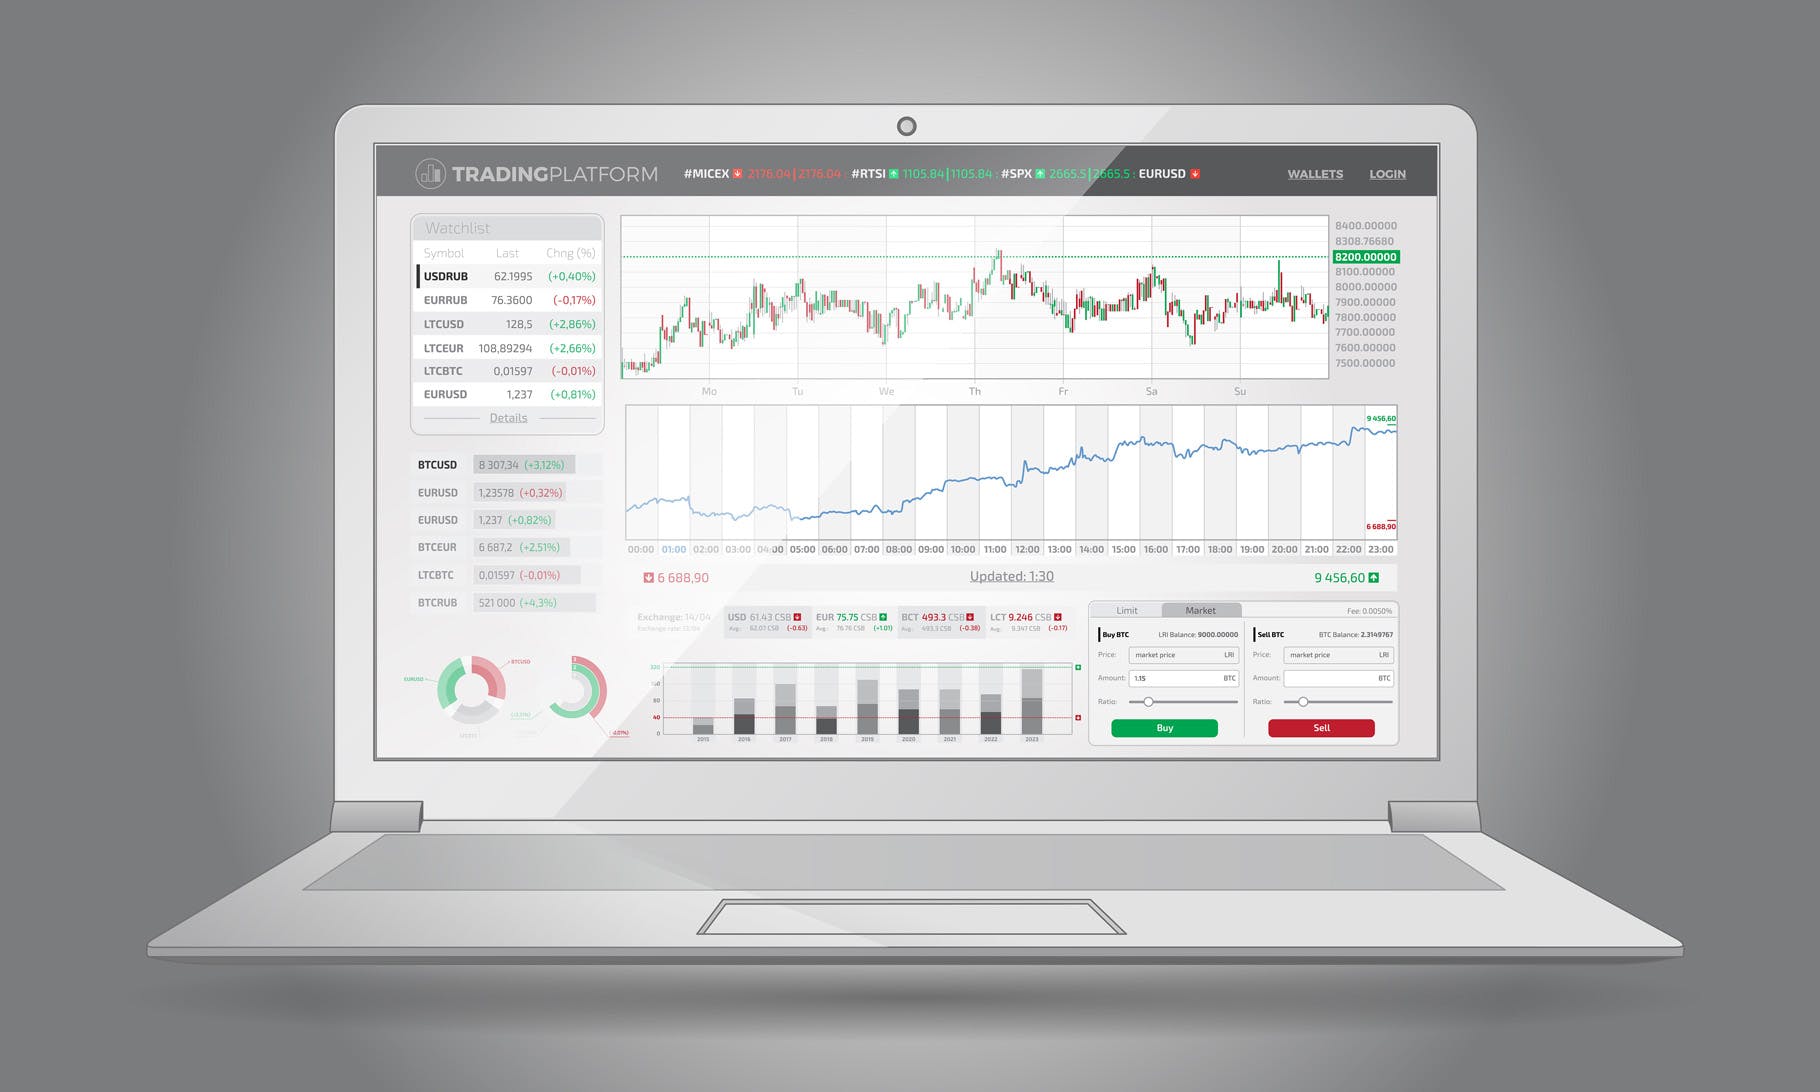 股票交易行情可视化数据图表设计模板 Trading Infographic Elements插图(5)